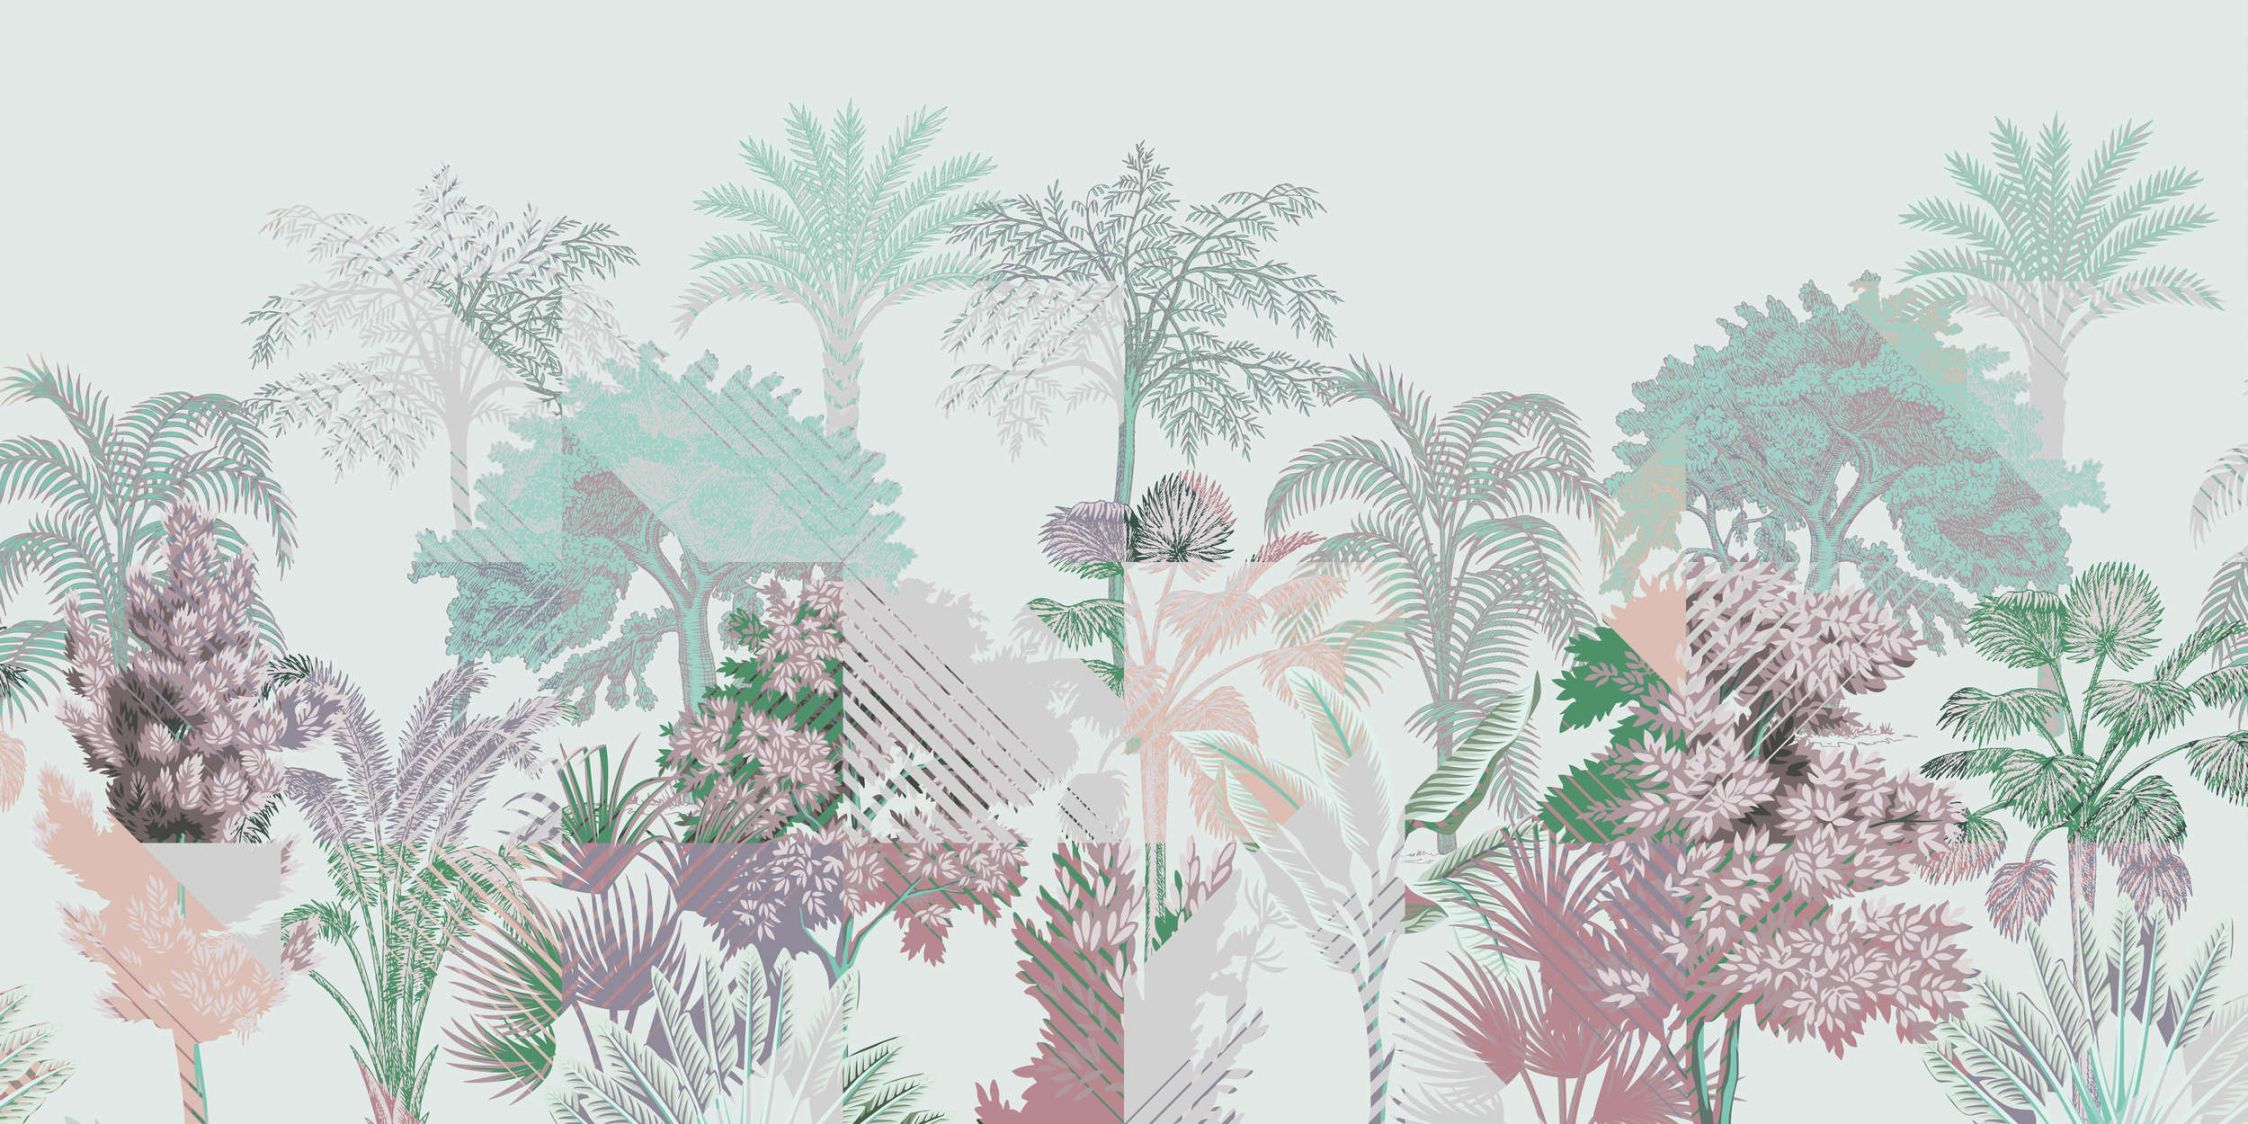             Carta da parati »esplanade 1« - giungla patchwork con cespugli - verde, rosa | tessuto non tessuto leggero
        